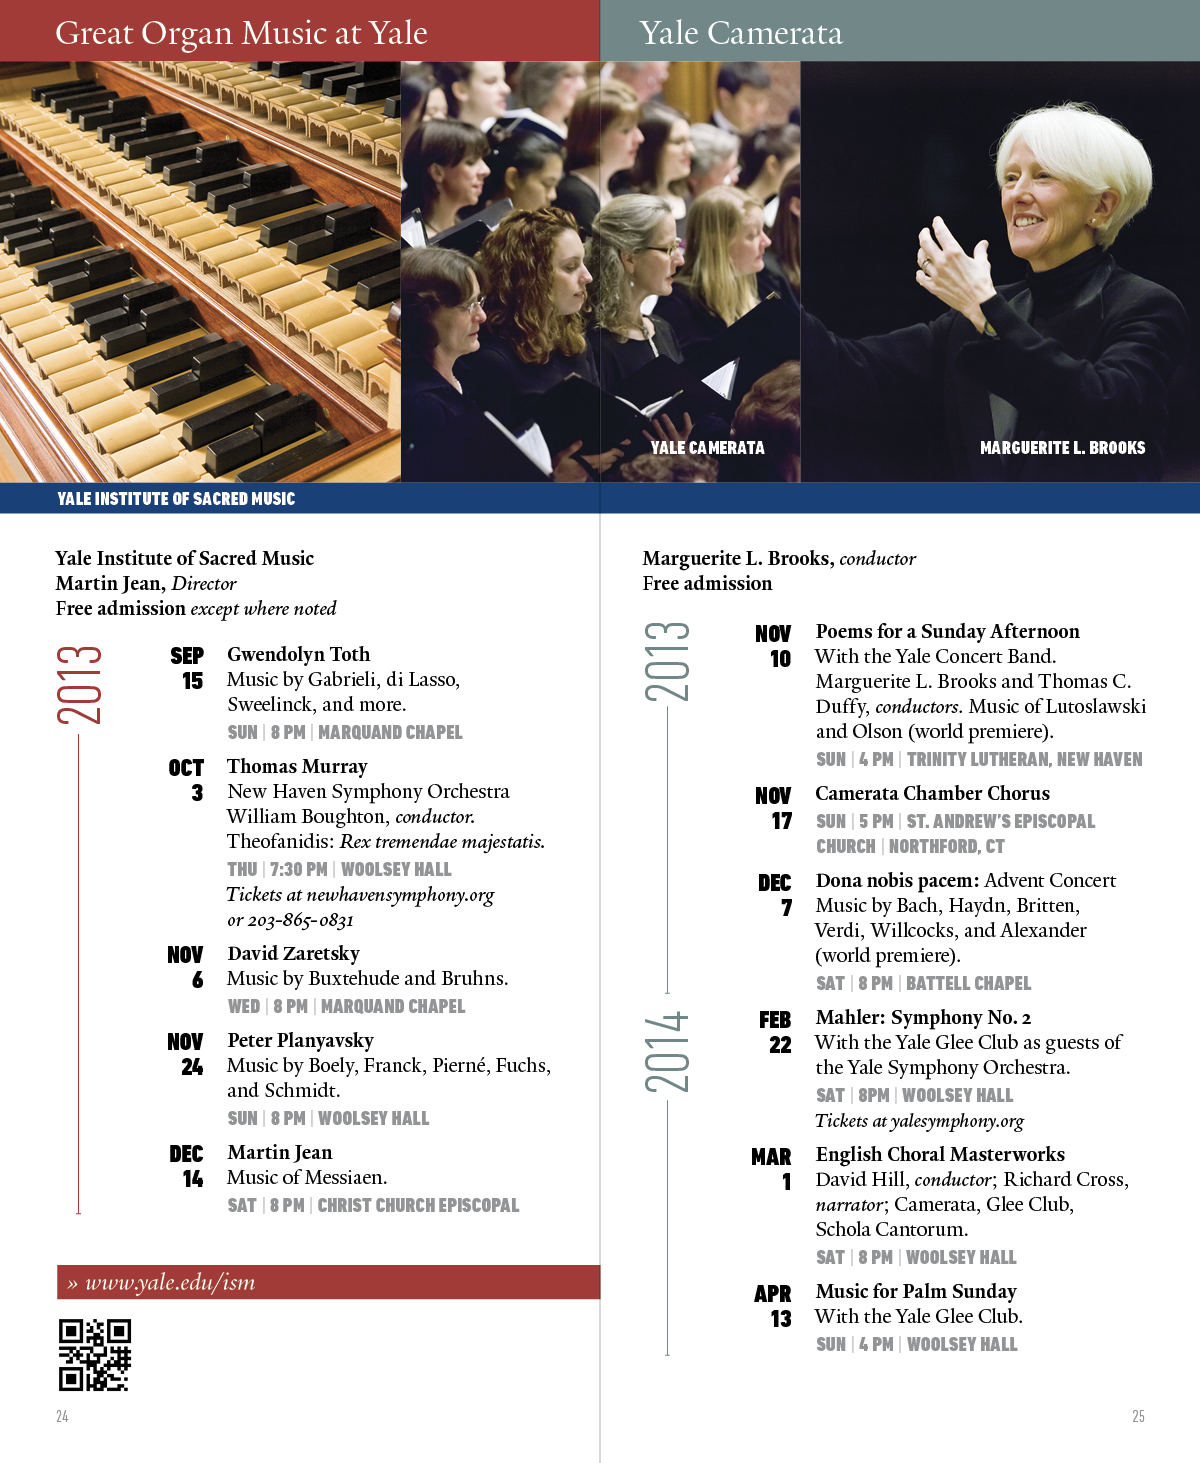 Music at Yale University Season Program / Schedule / Calendar by Granite Bay Graphic Design